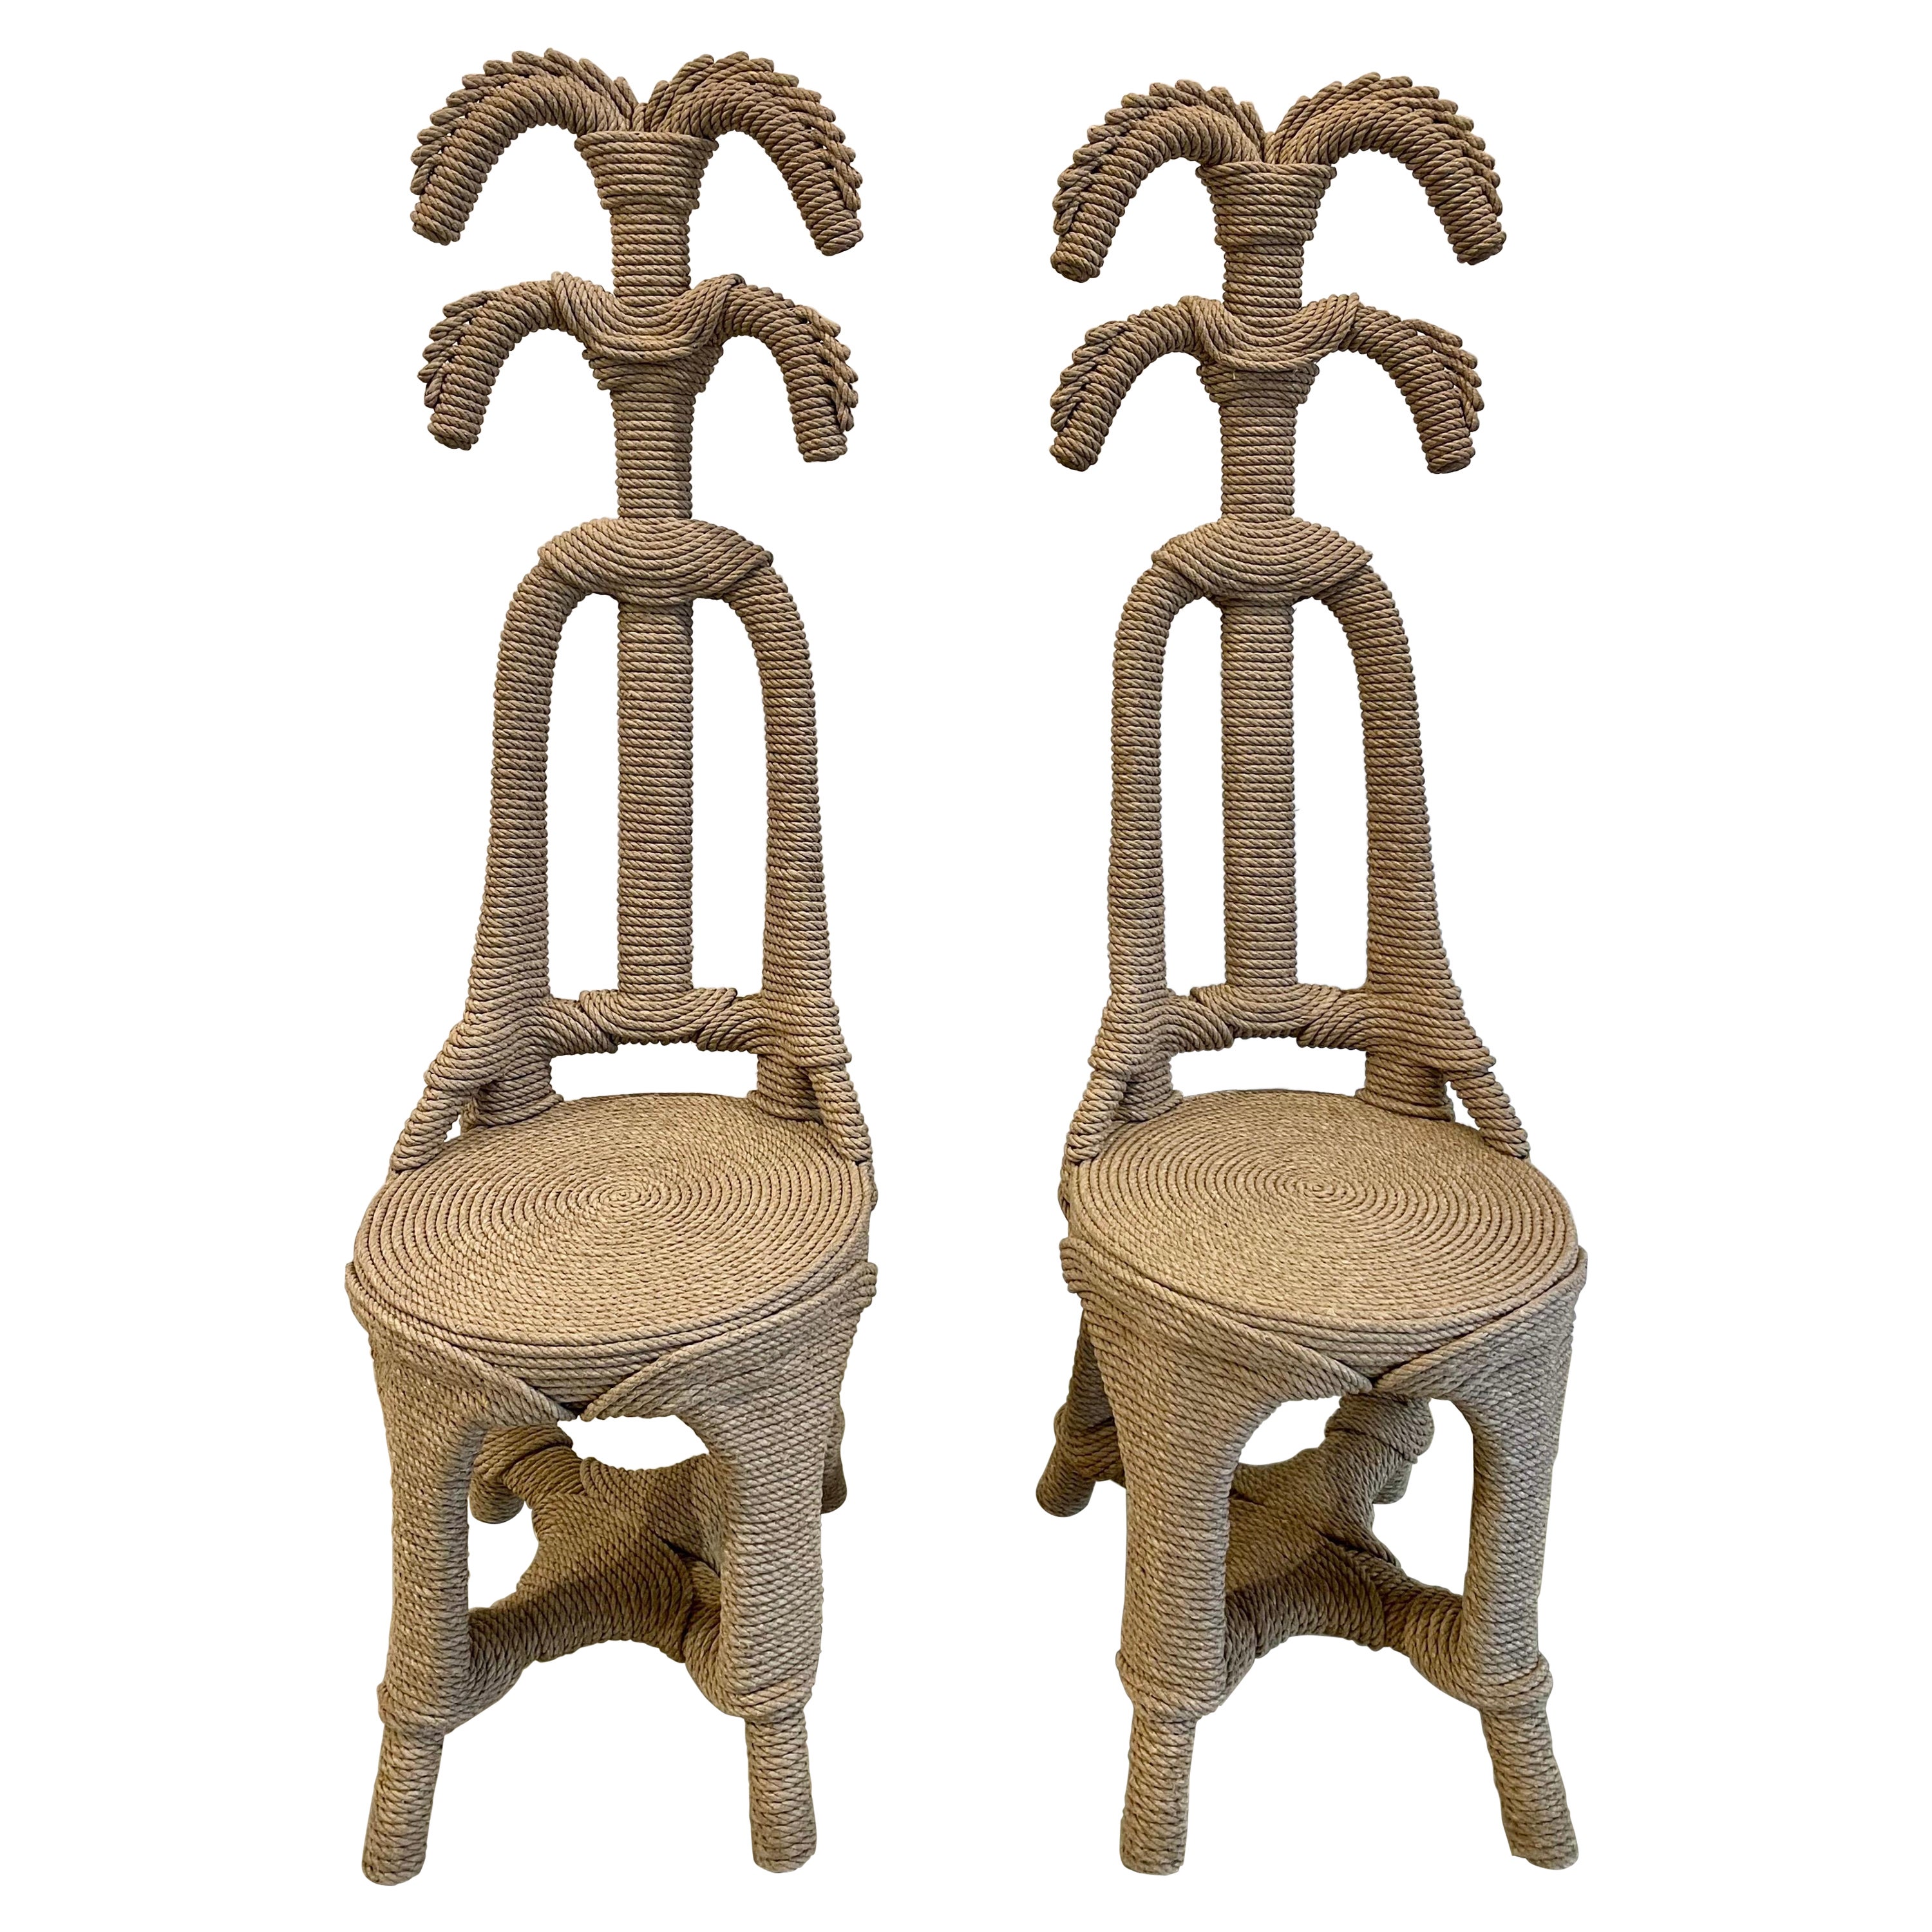 Christian Astuguevieille "Moiste" Rope-Clad Chairs, Pair